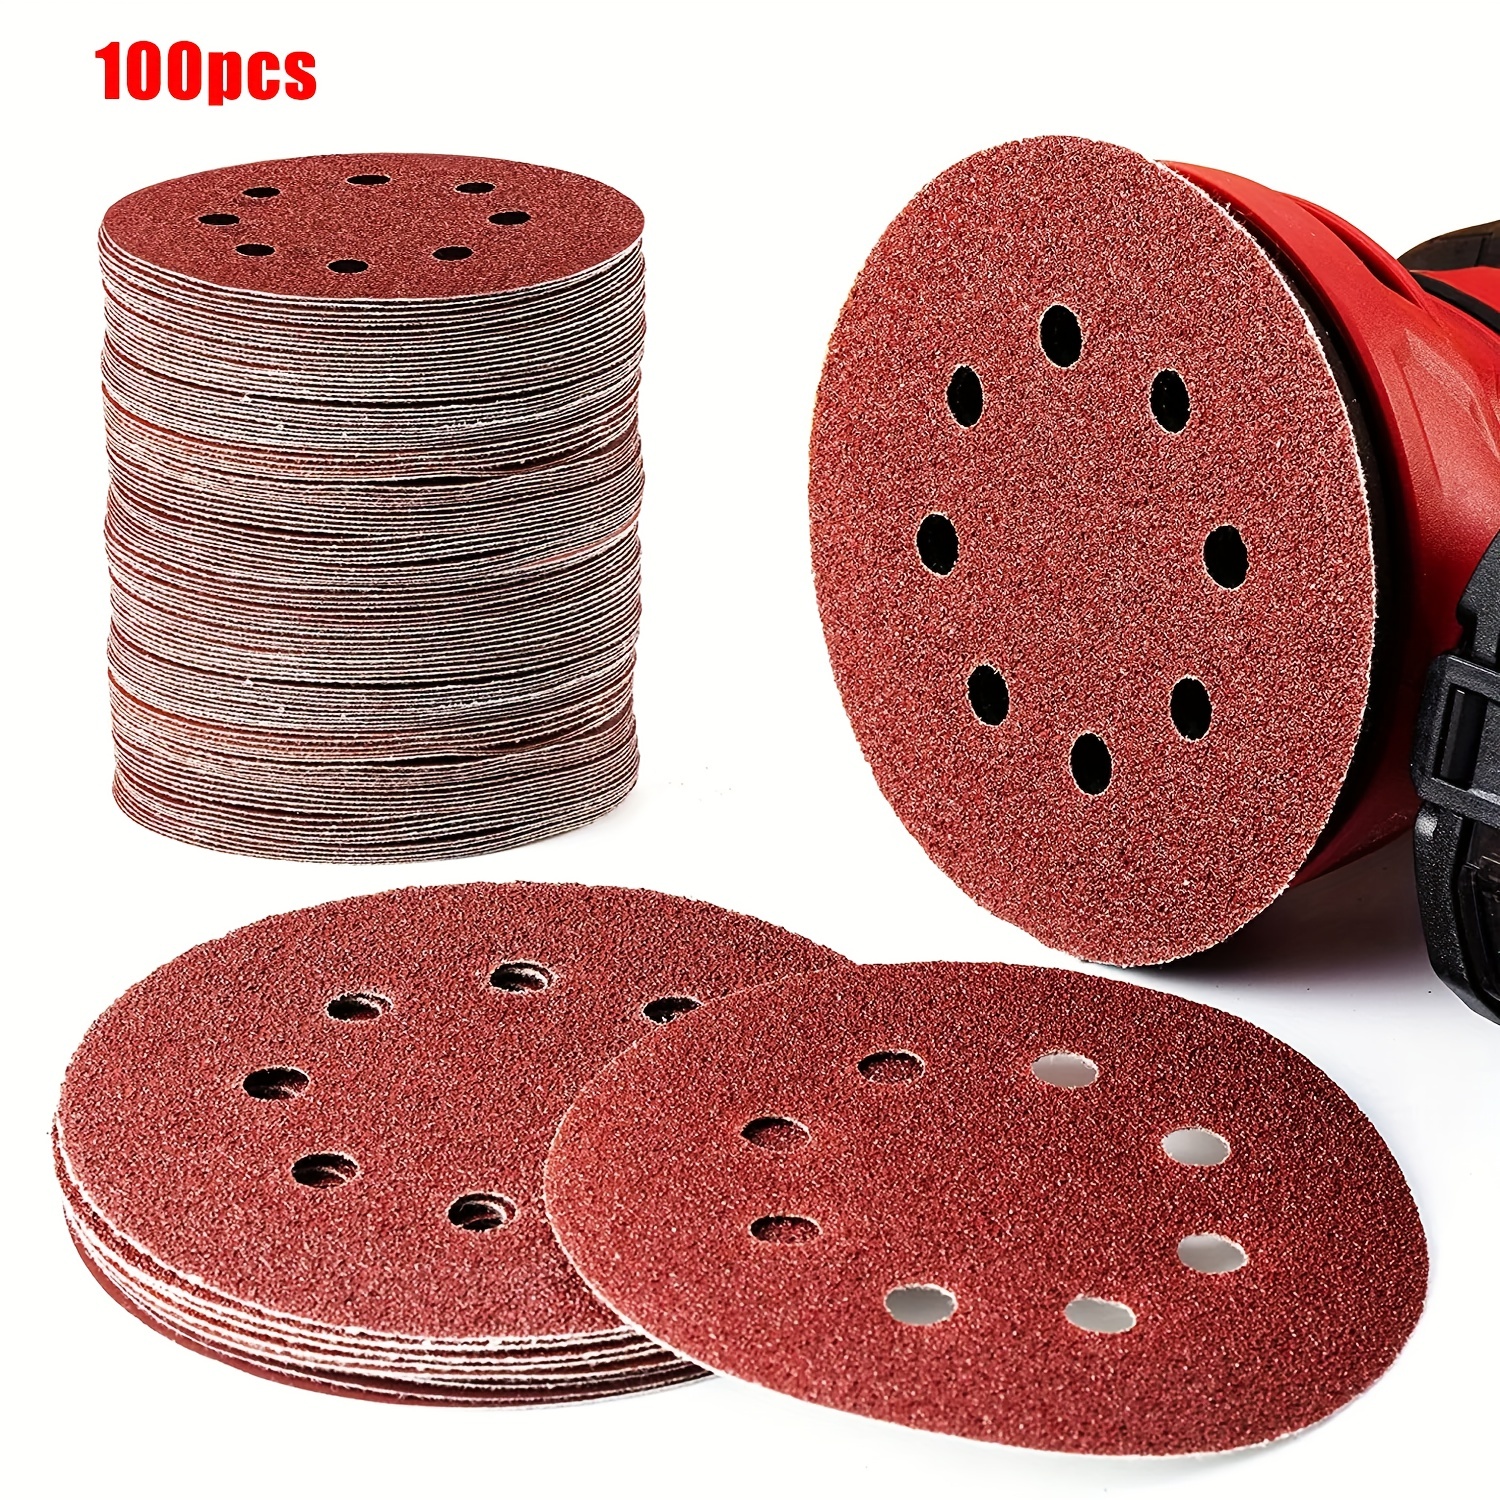 

100pcs 125mm Sanding Discs 8 Hole Hook Loop Sandpaper 60grit-600grit Sanding Paper Sanding Disc Abrasive Polishing Tools